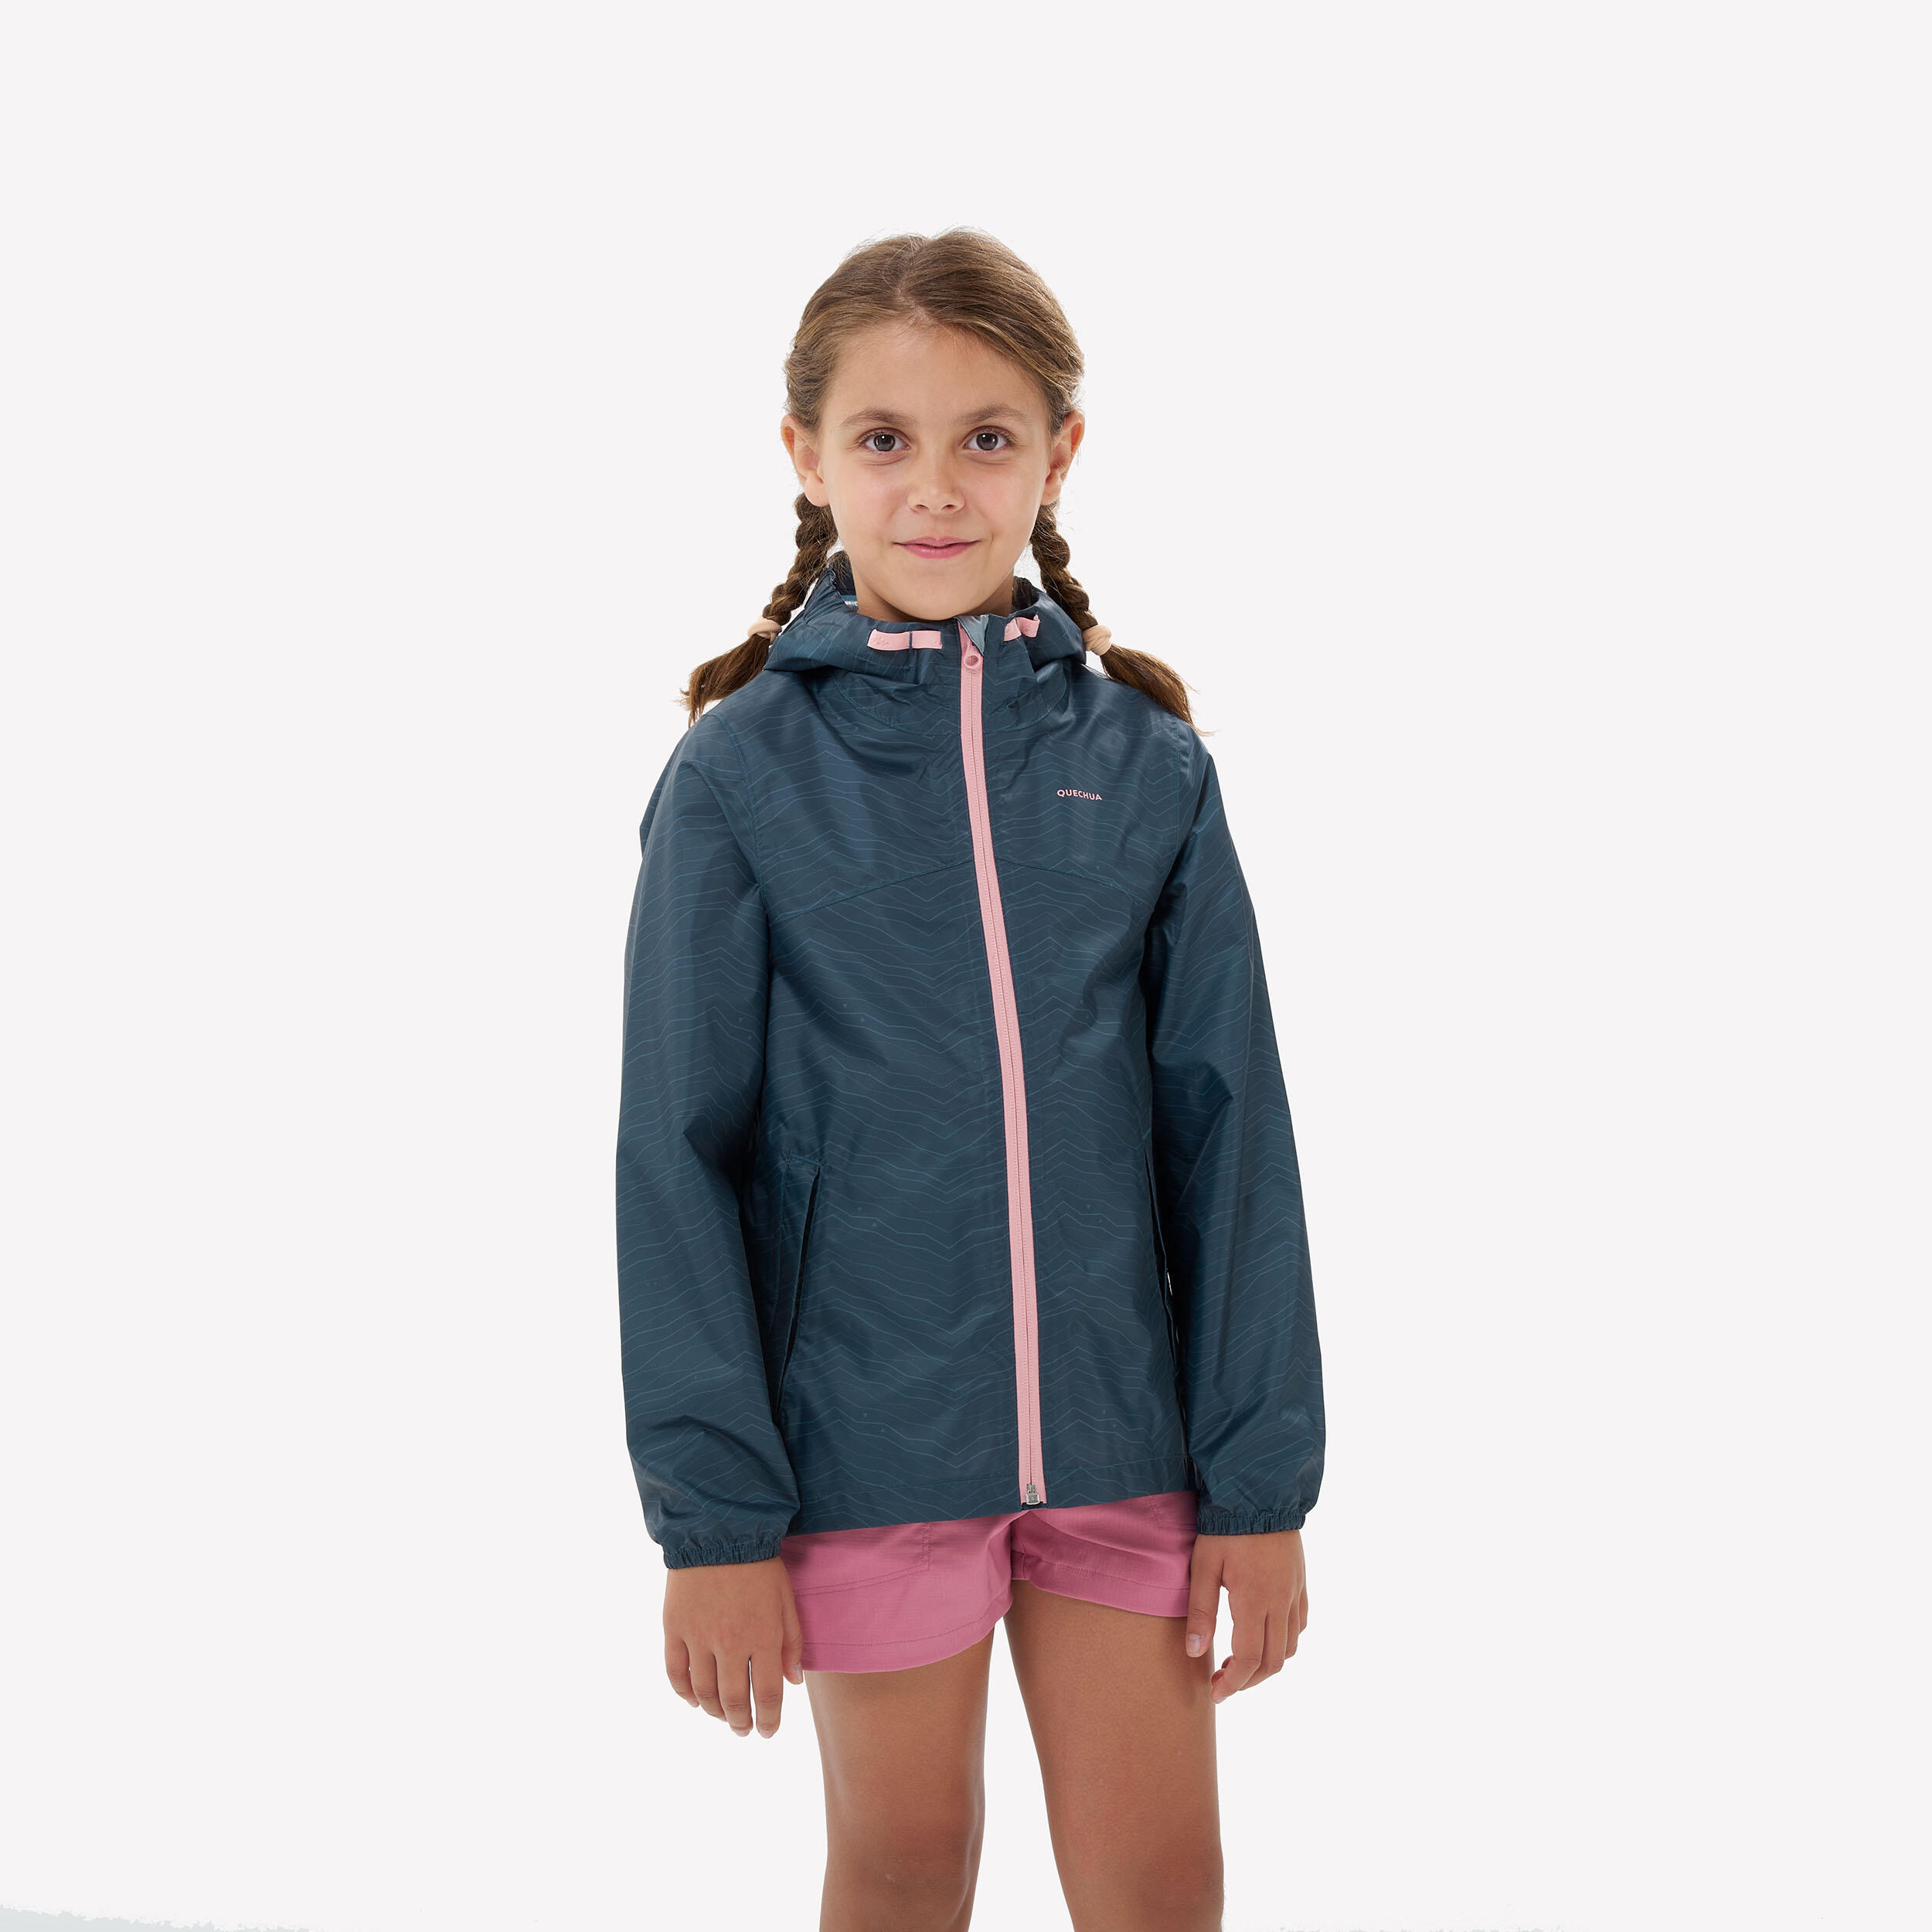 Waterproof Hiking Jacket - MH100 Zip - Child 7-15 years 1/7